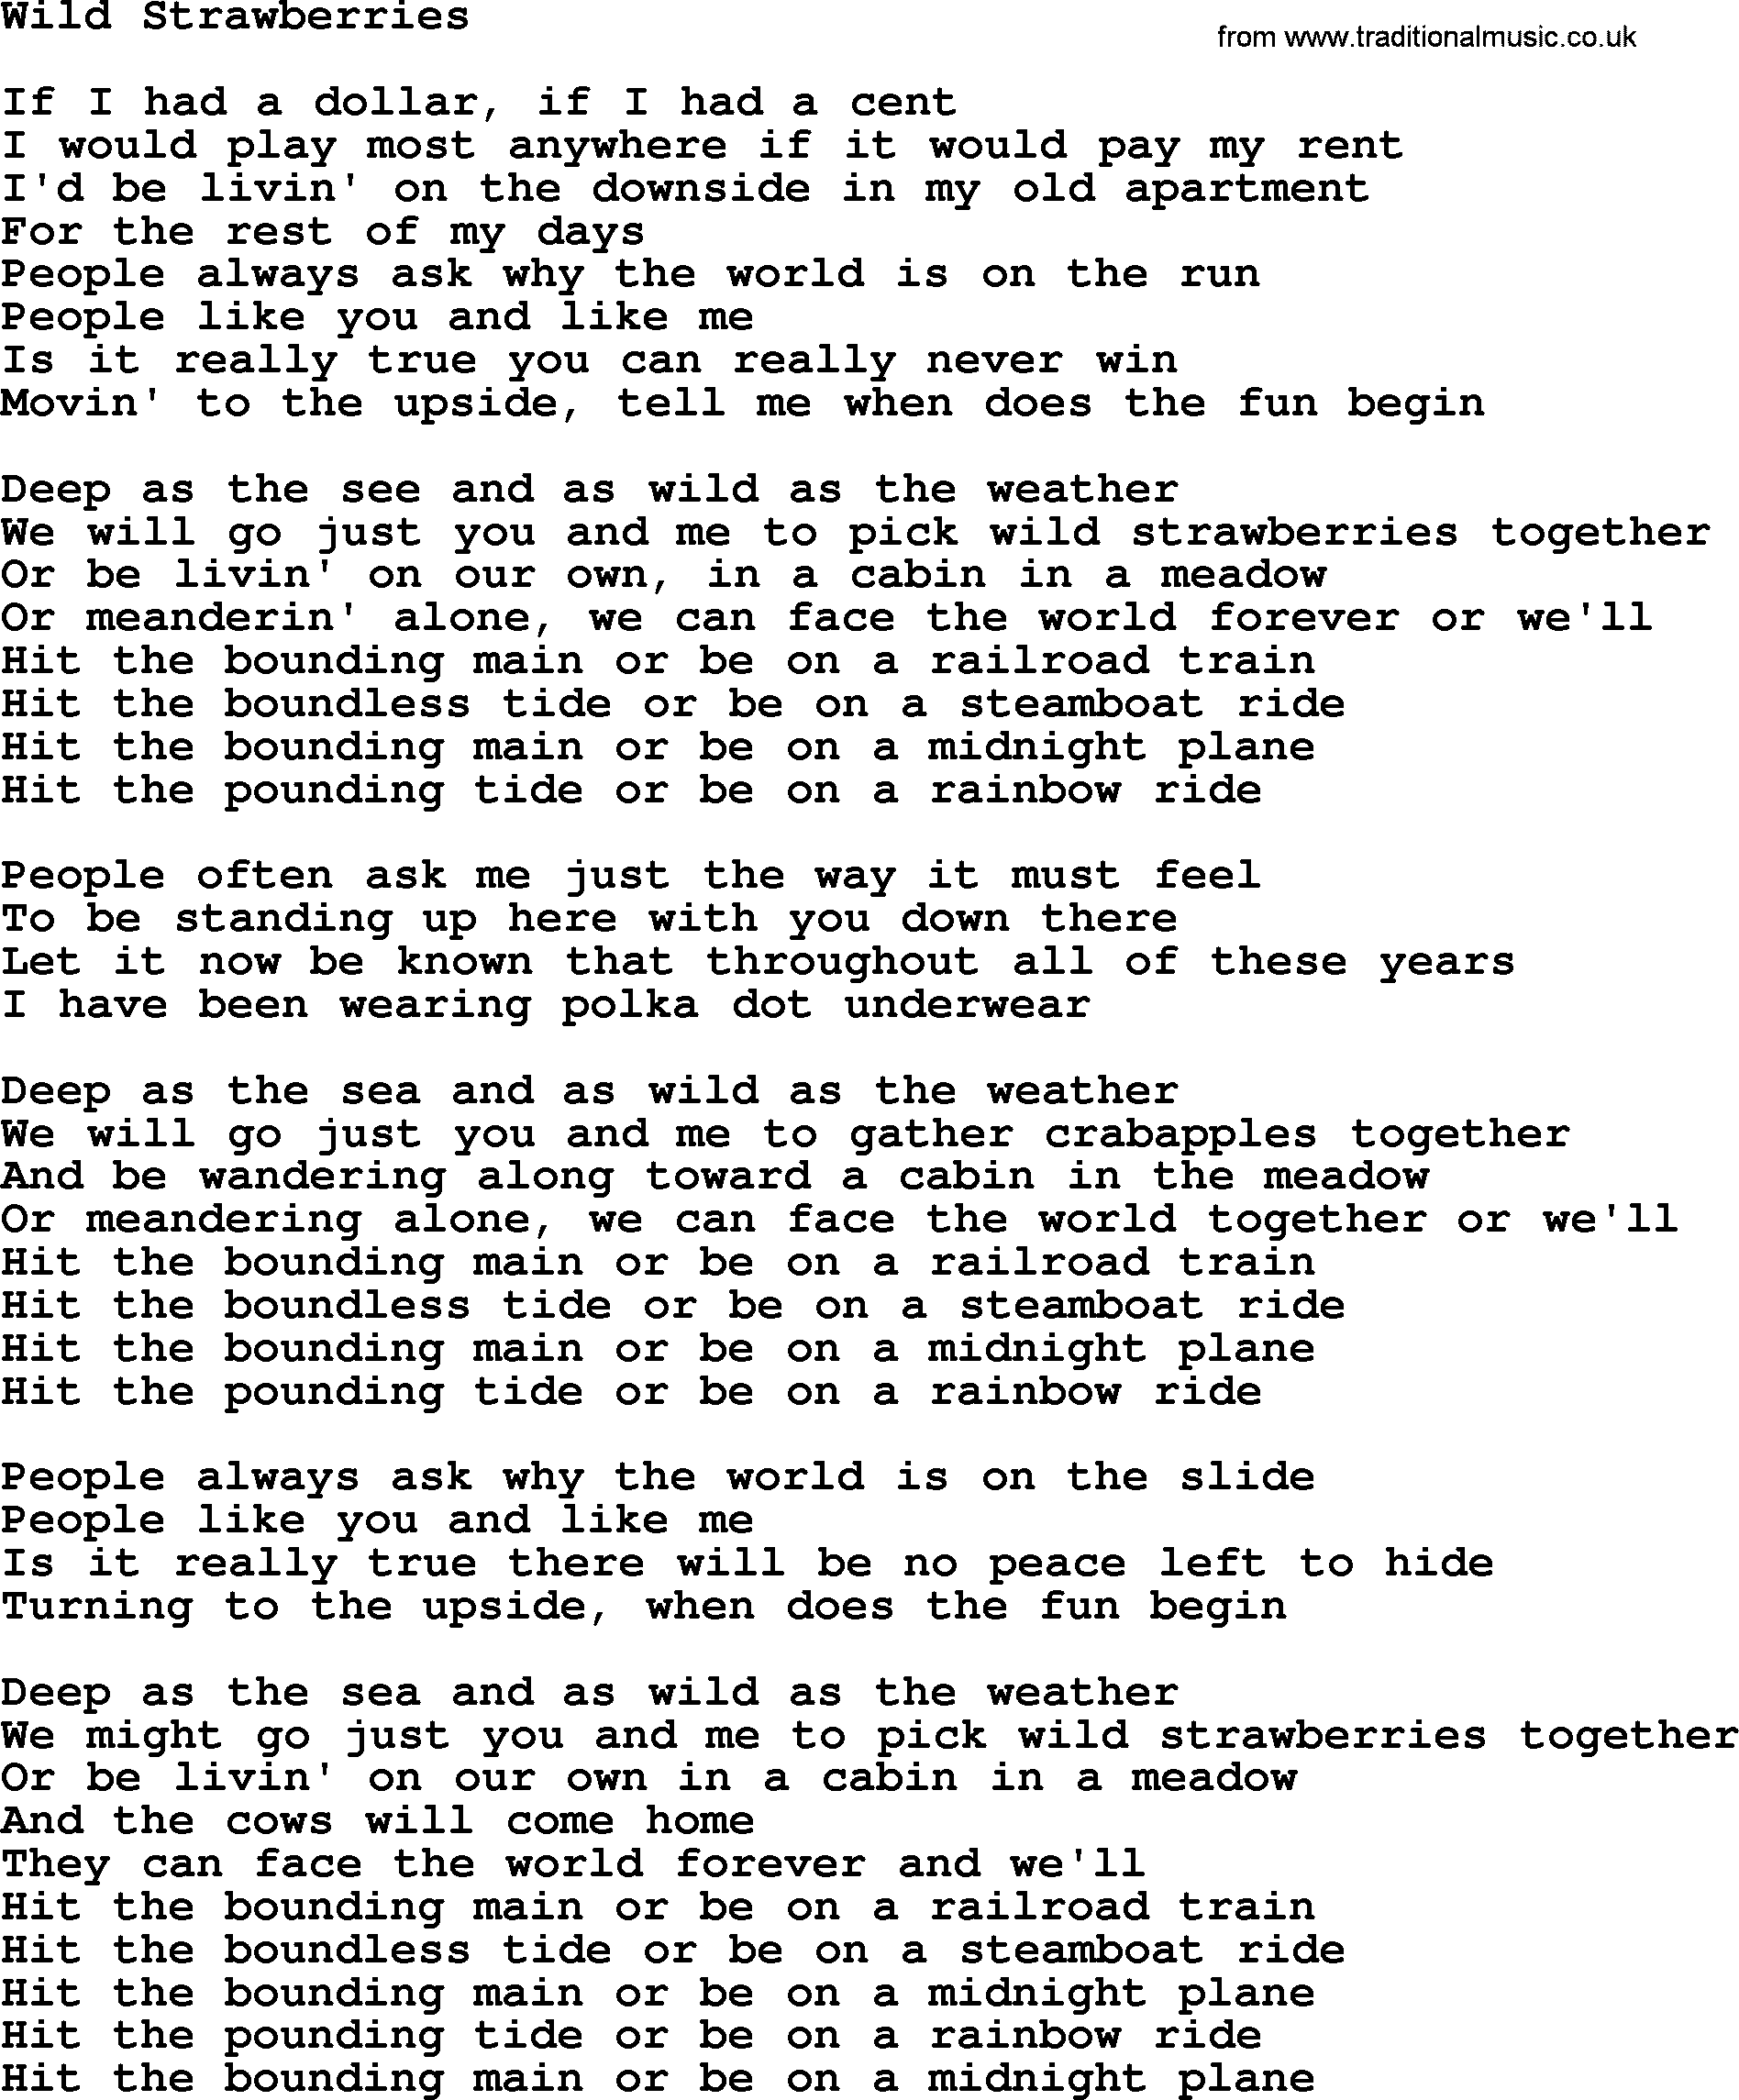 Gordon Lightfoot song Wild Strawberries, lyrics